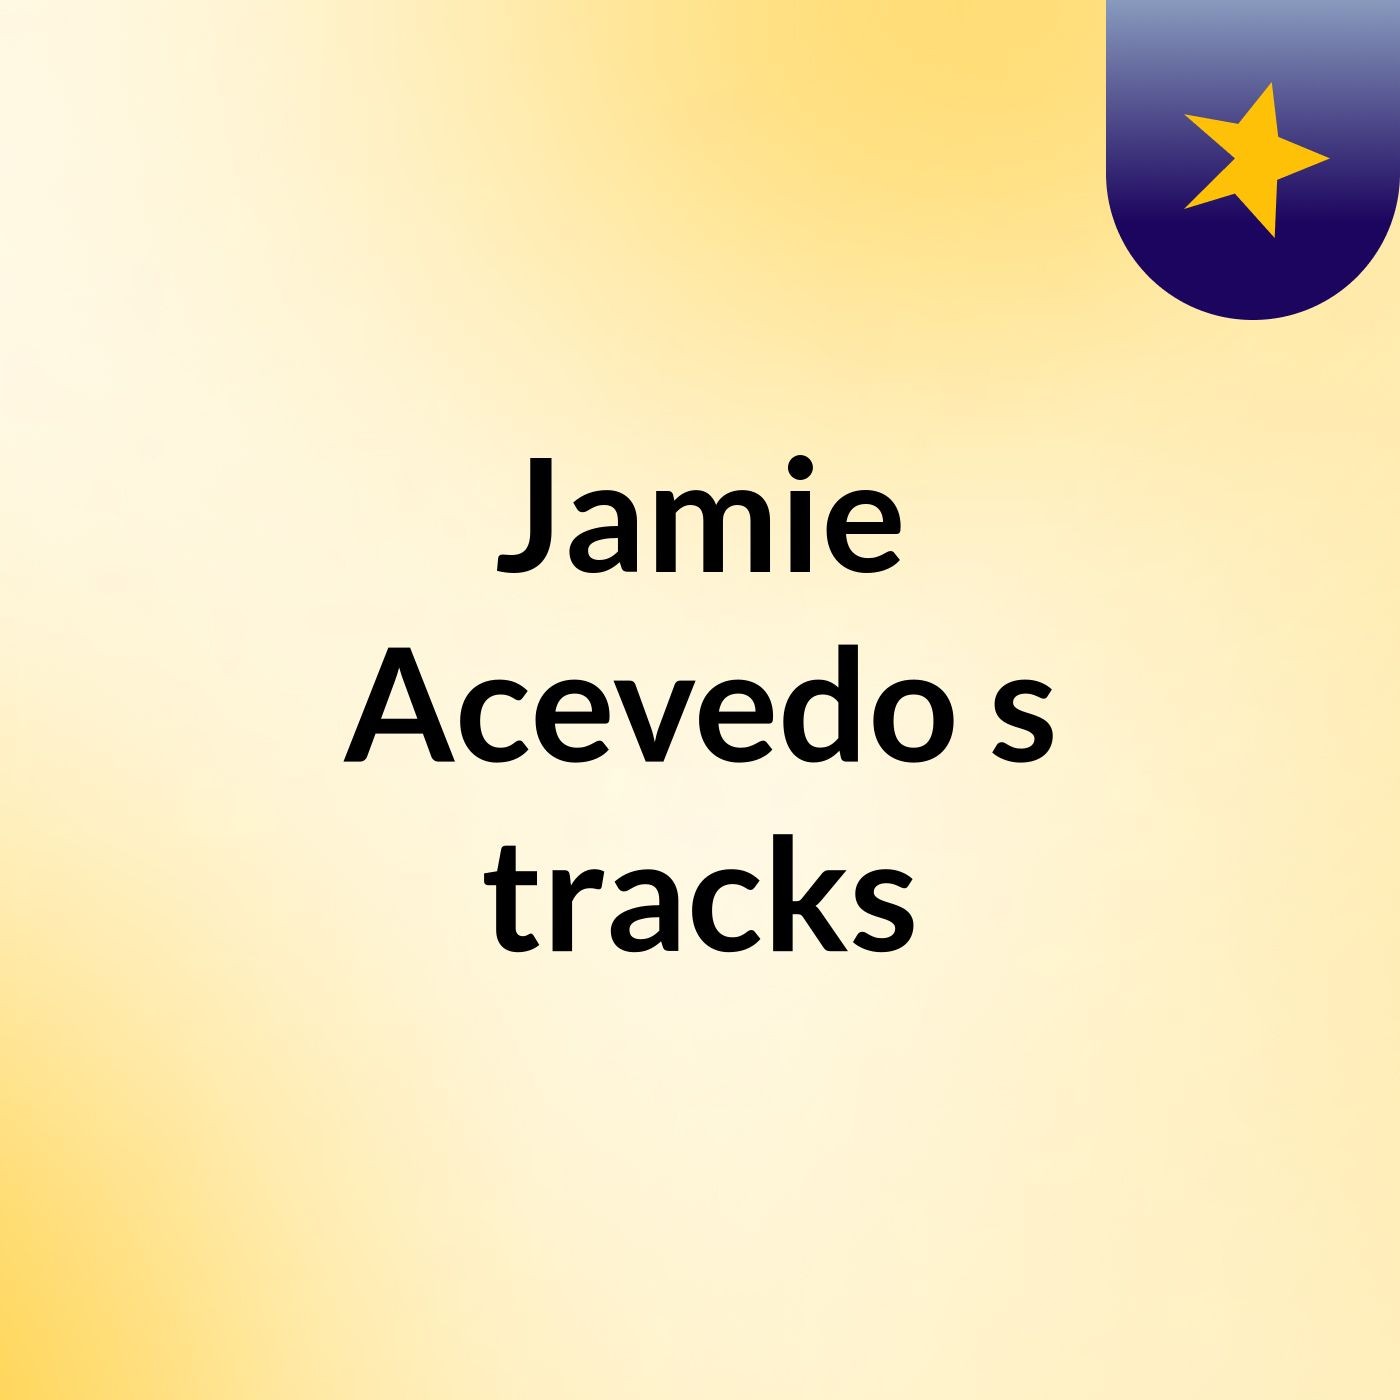 Jamie Acevedo's tracks